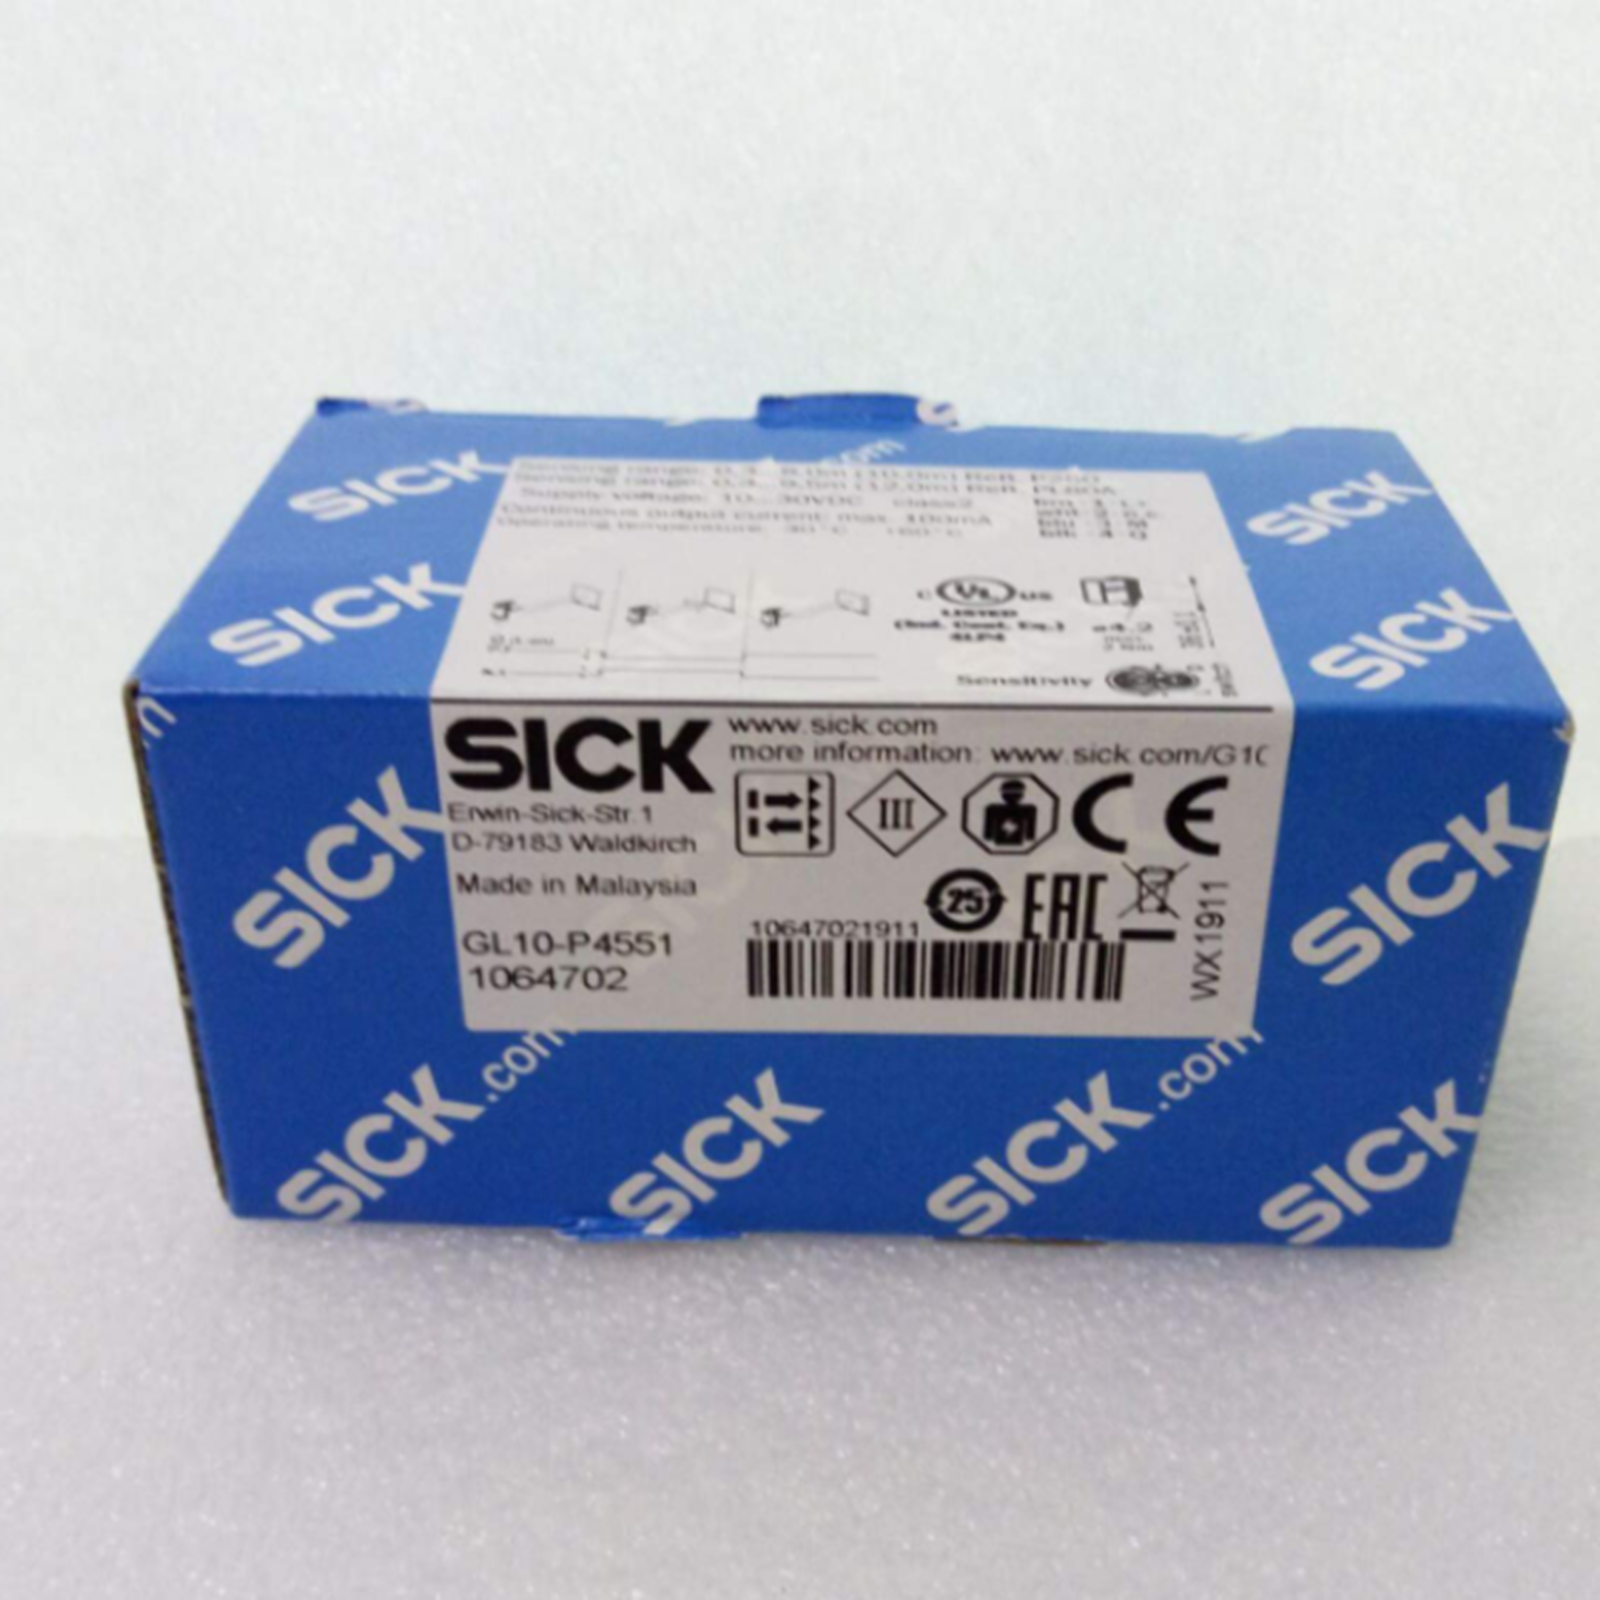 SICK GL10-P4551 Photoelectric Sensor